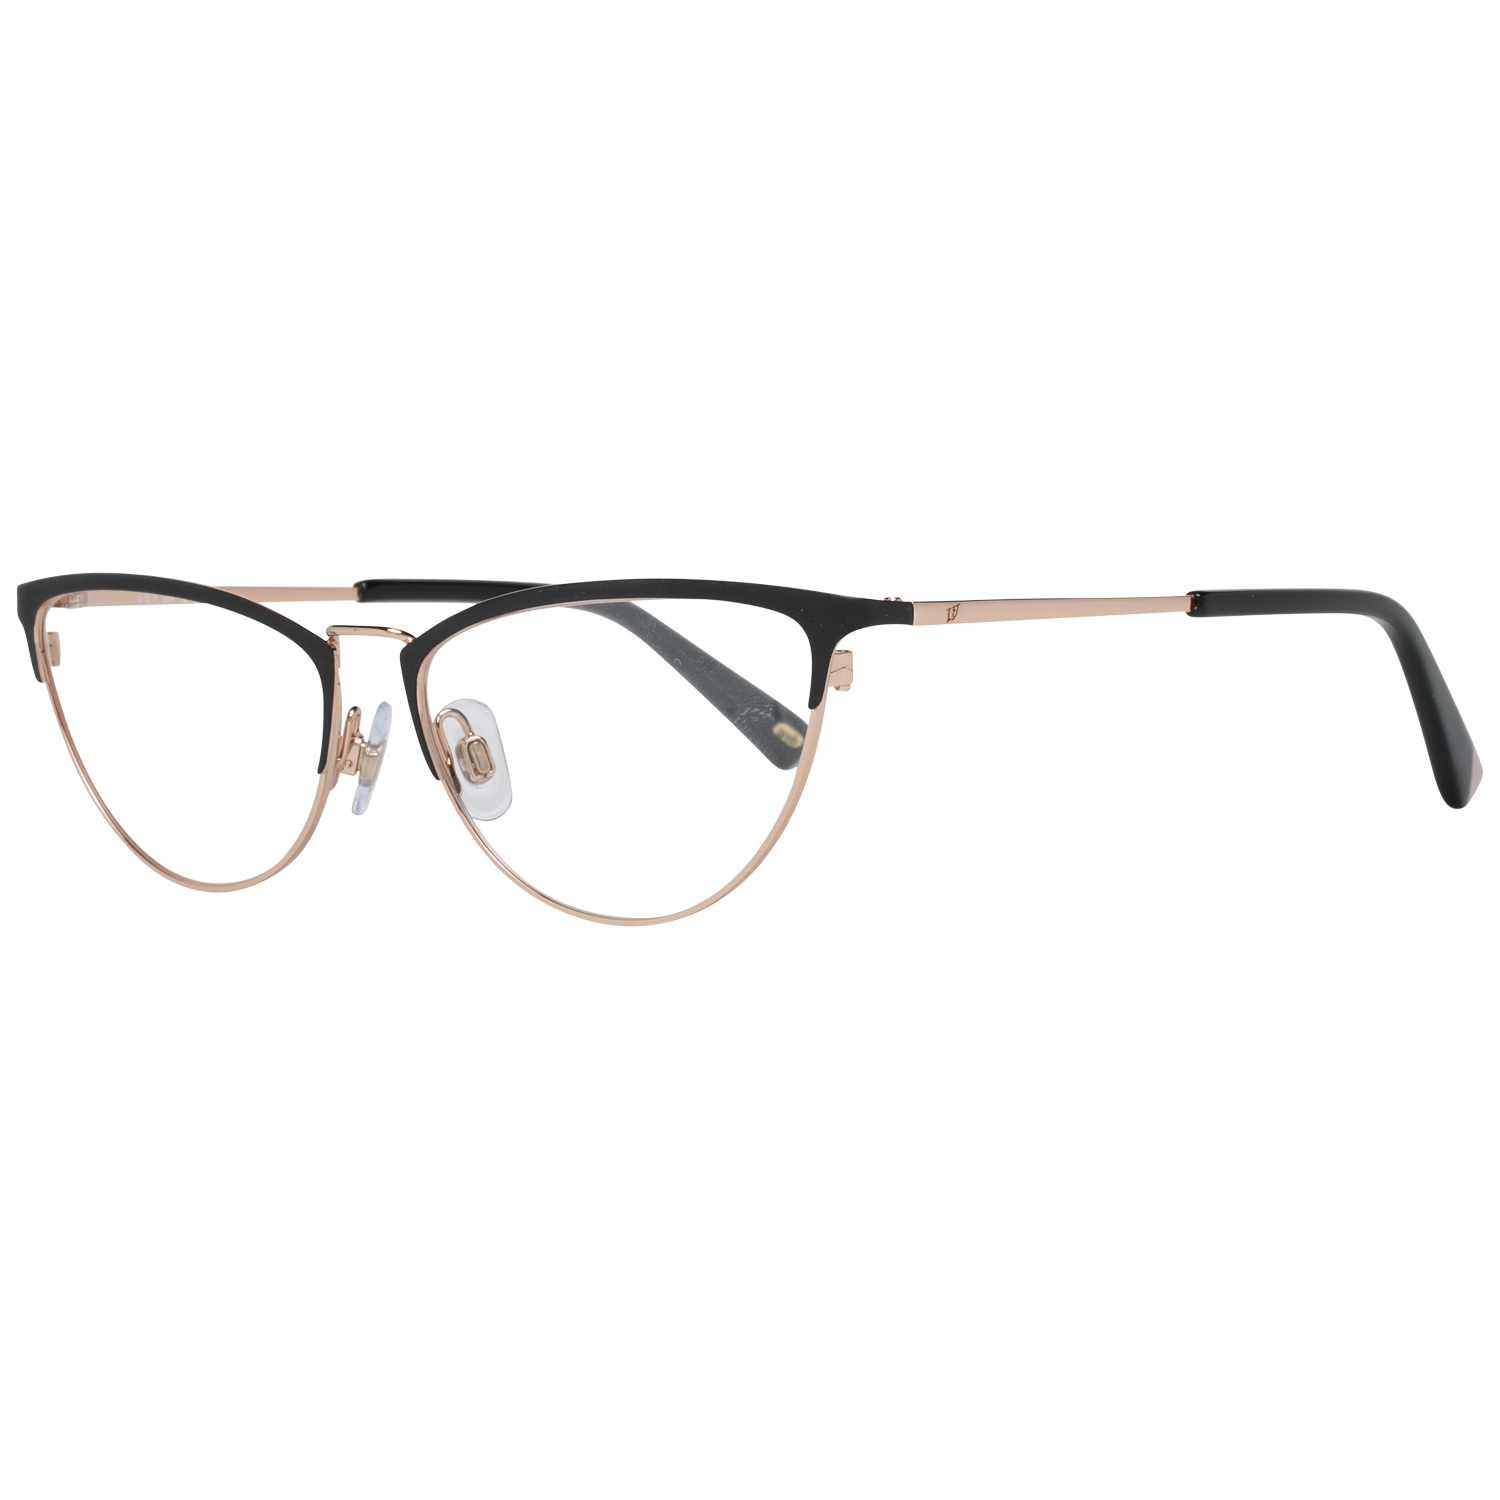 Web Frames Web Prescription Glasses Optical Frame WE5304 033 54 Eyeglasses Eyewear UK USA Australia 